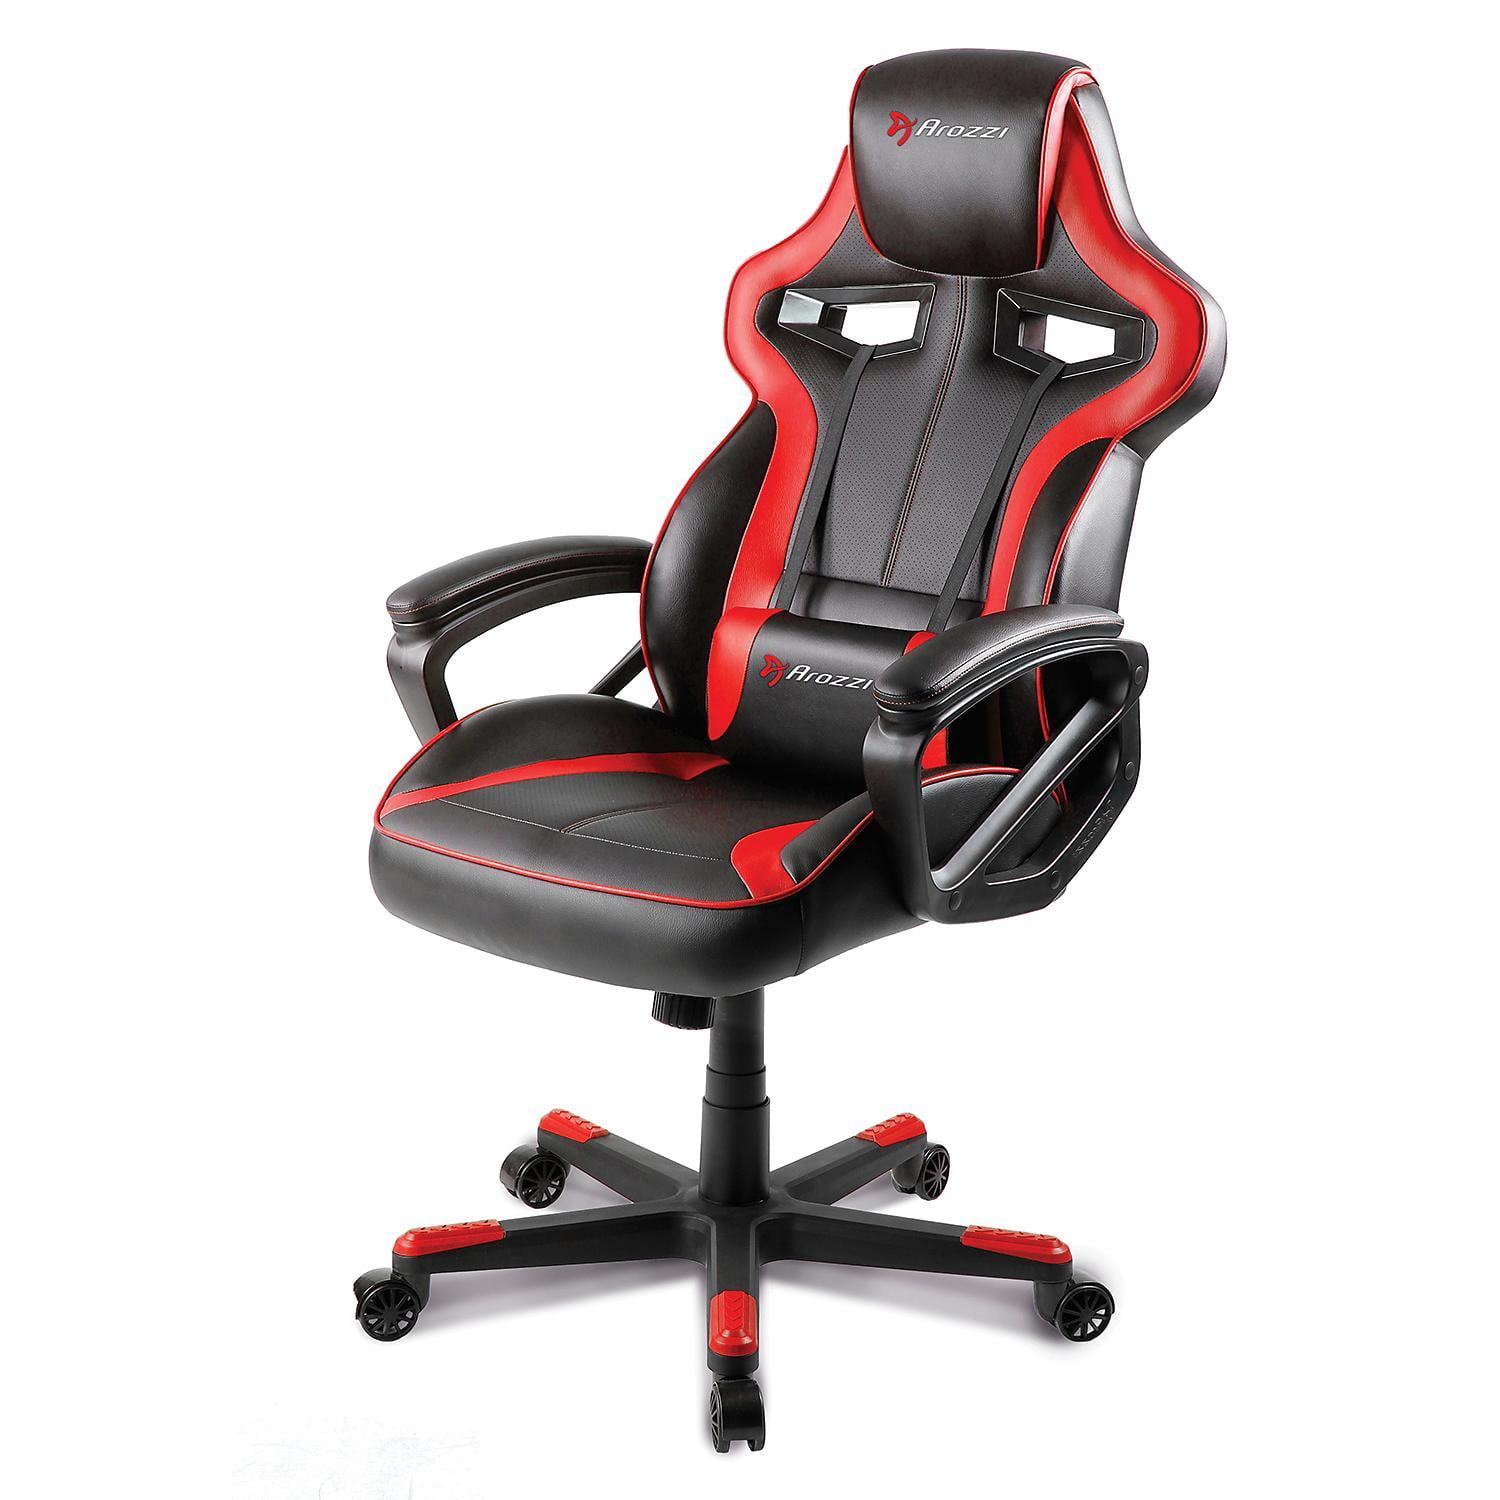 Arozzi Milano Enhanced Gaming Chair (Assorted Colors) - Walmart.com